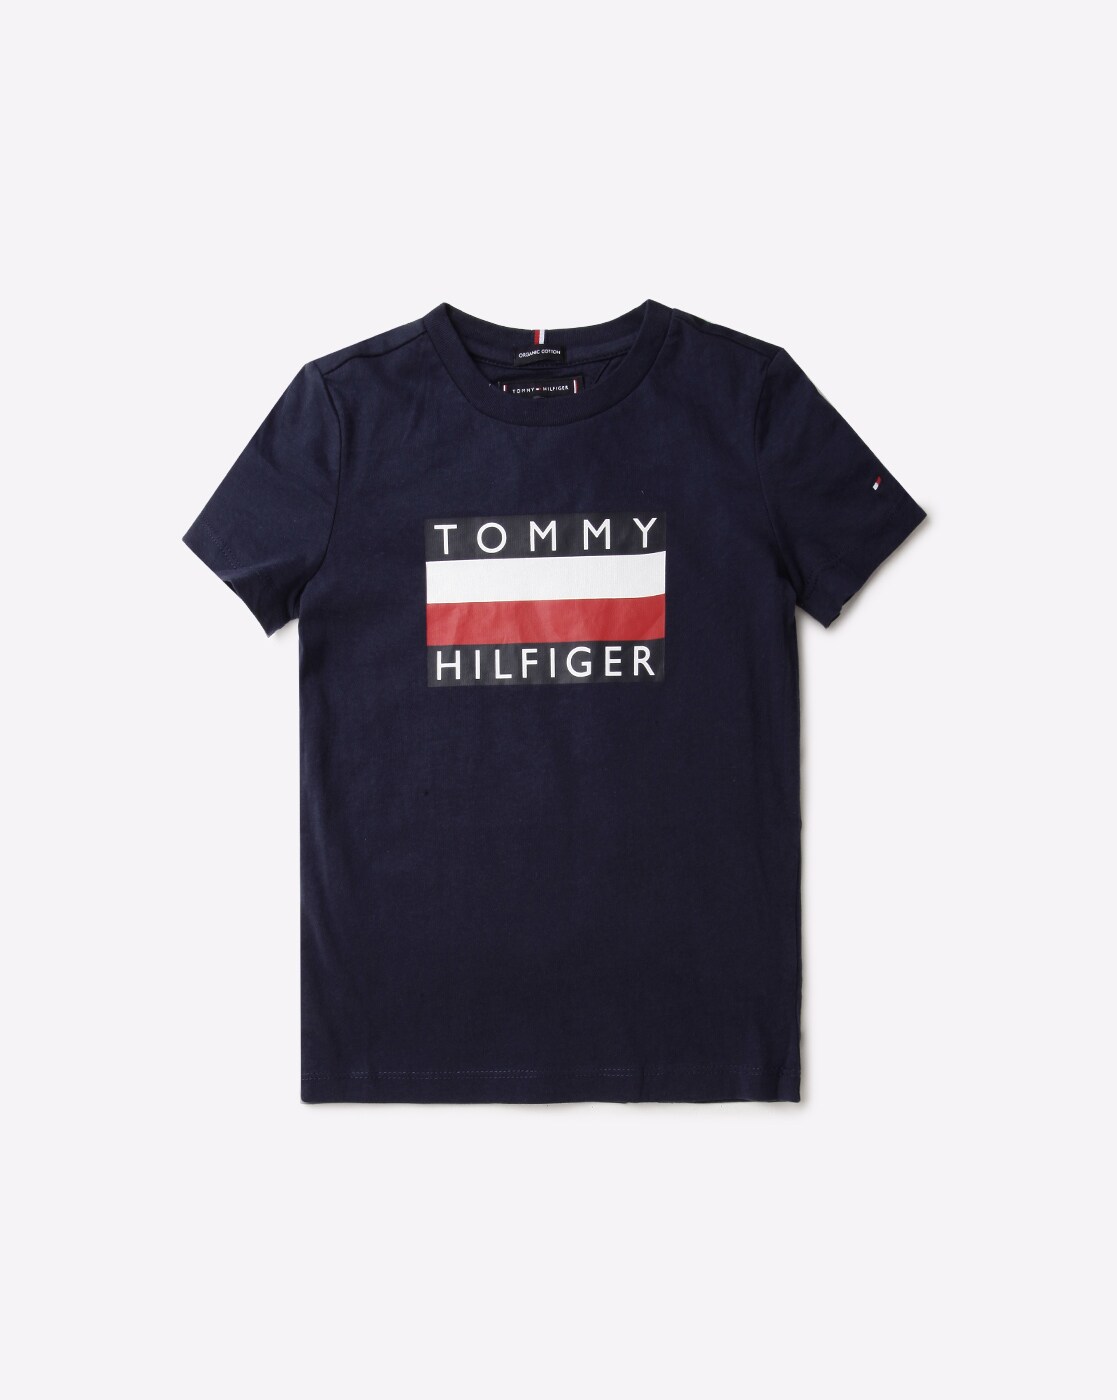 tommy hilfiger shirt navy blue